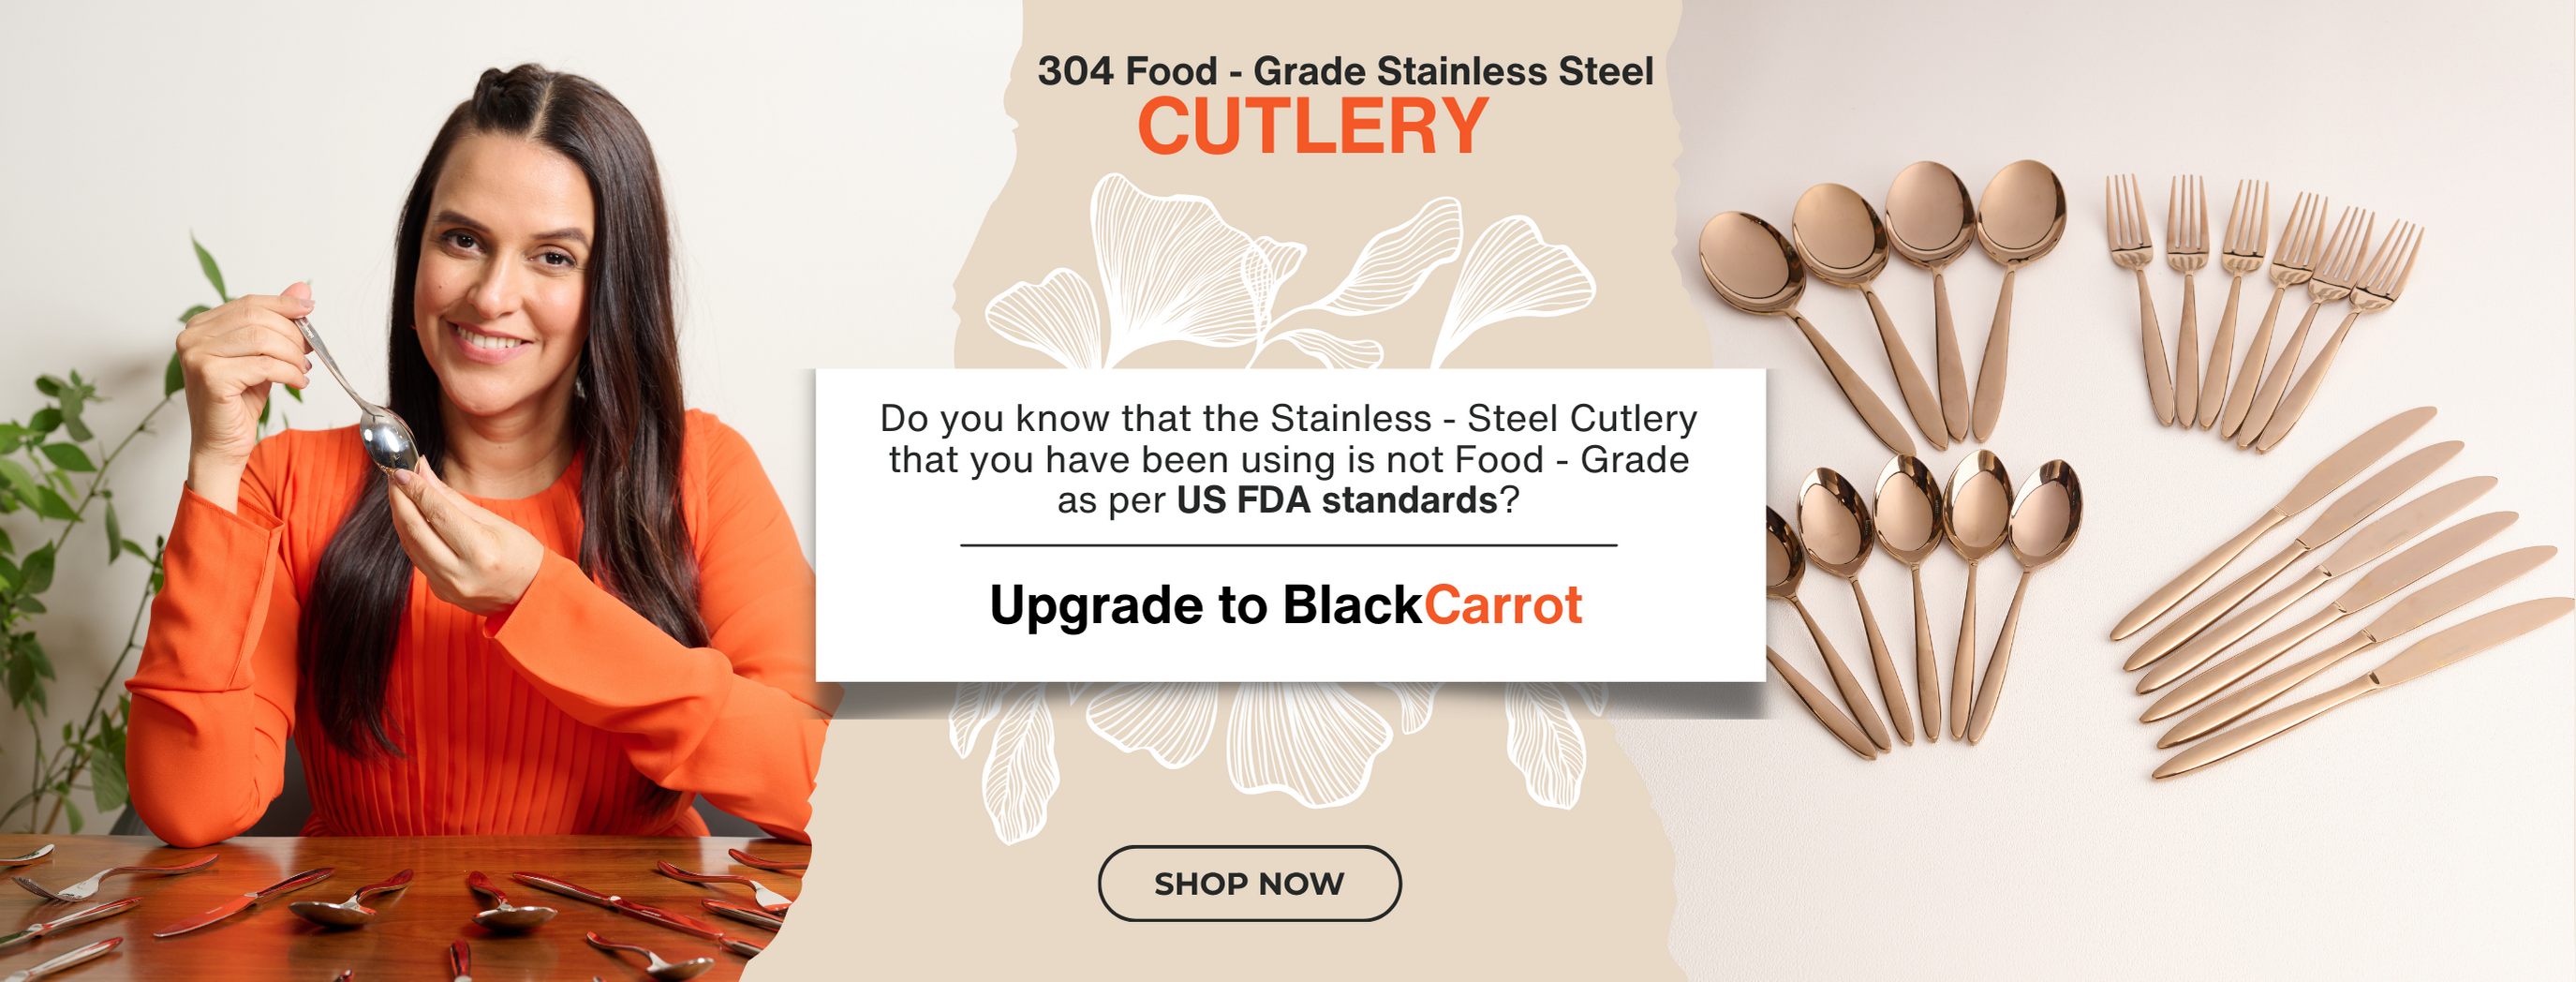 BlackCarrot Cutlery